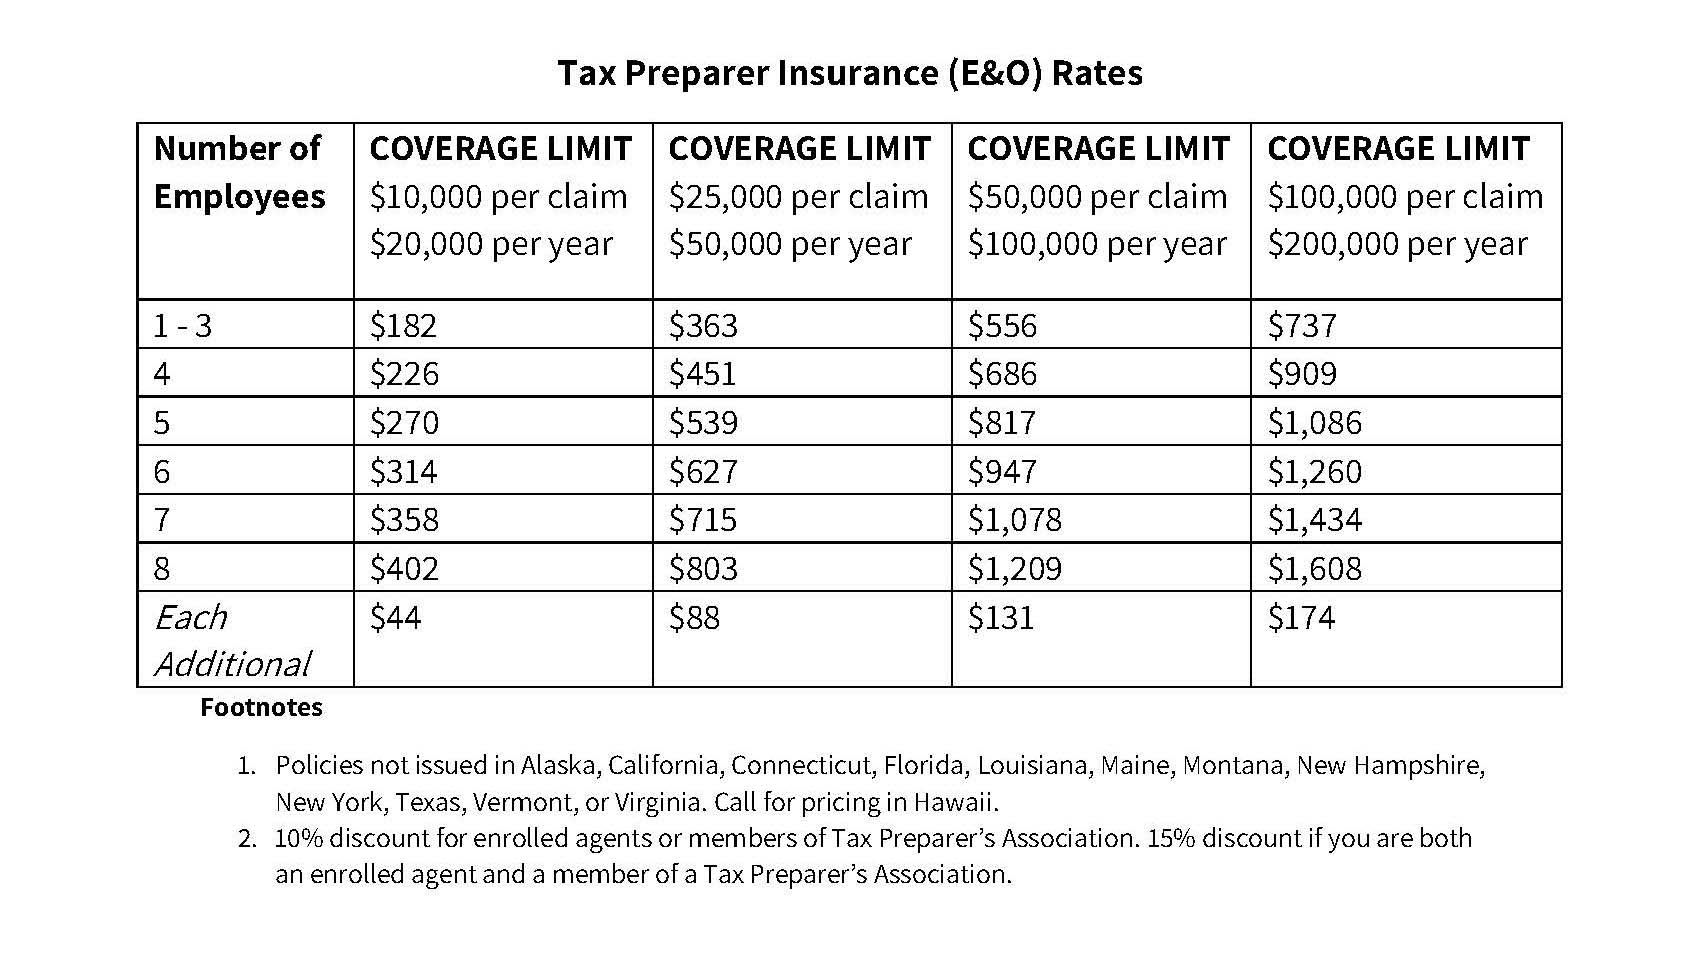 Tax-Peparer-Insurance-Table